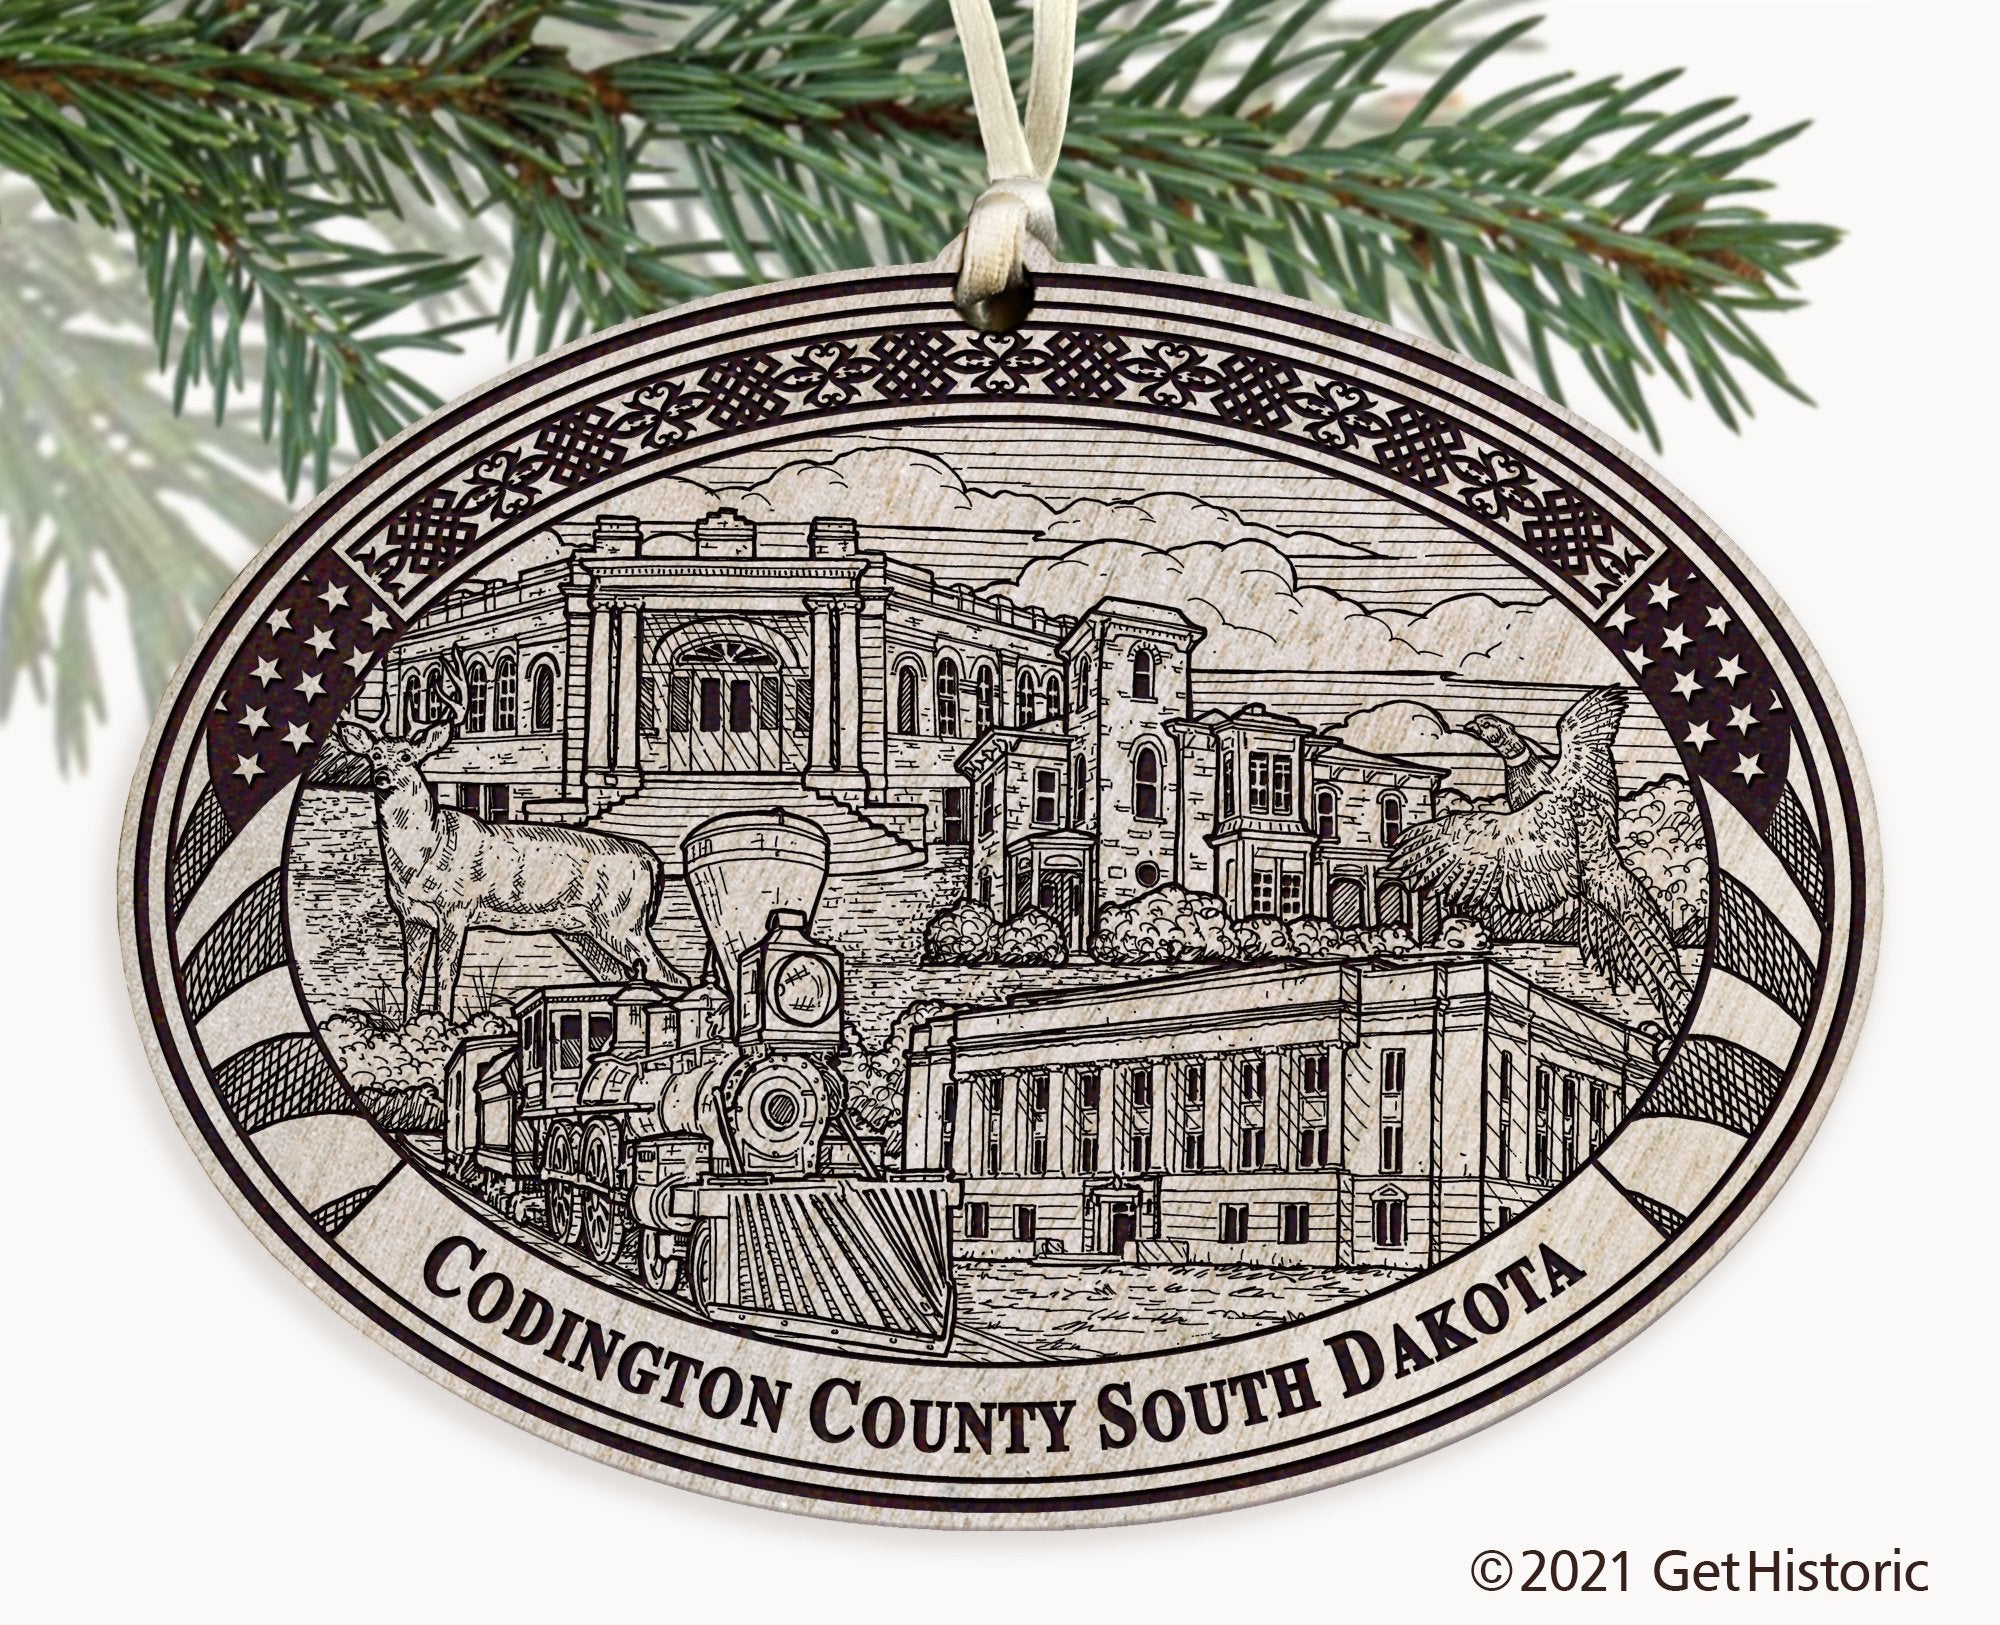 Codington County South Dakota Engraved Ornament